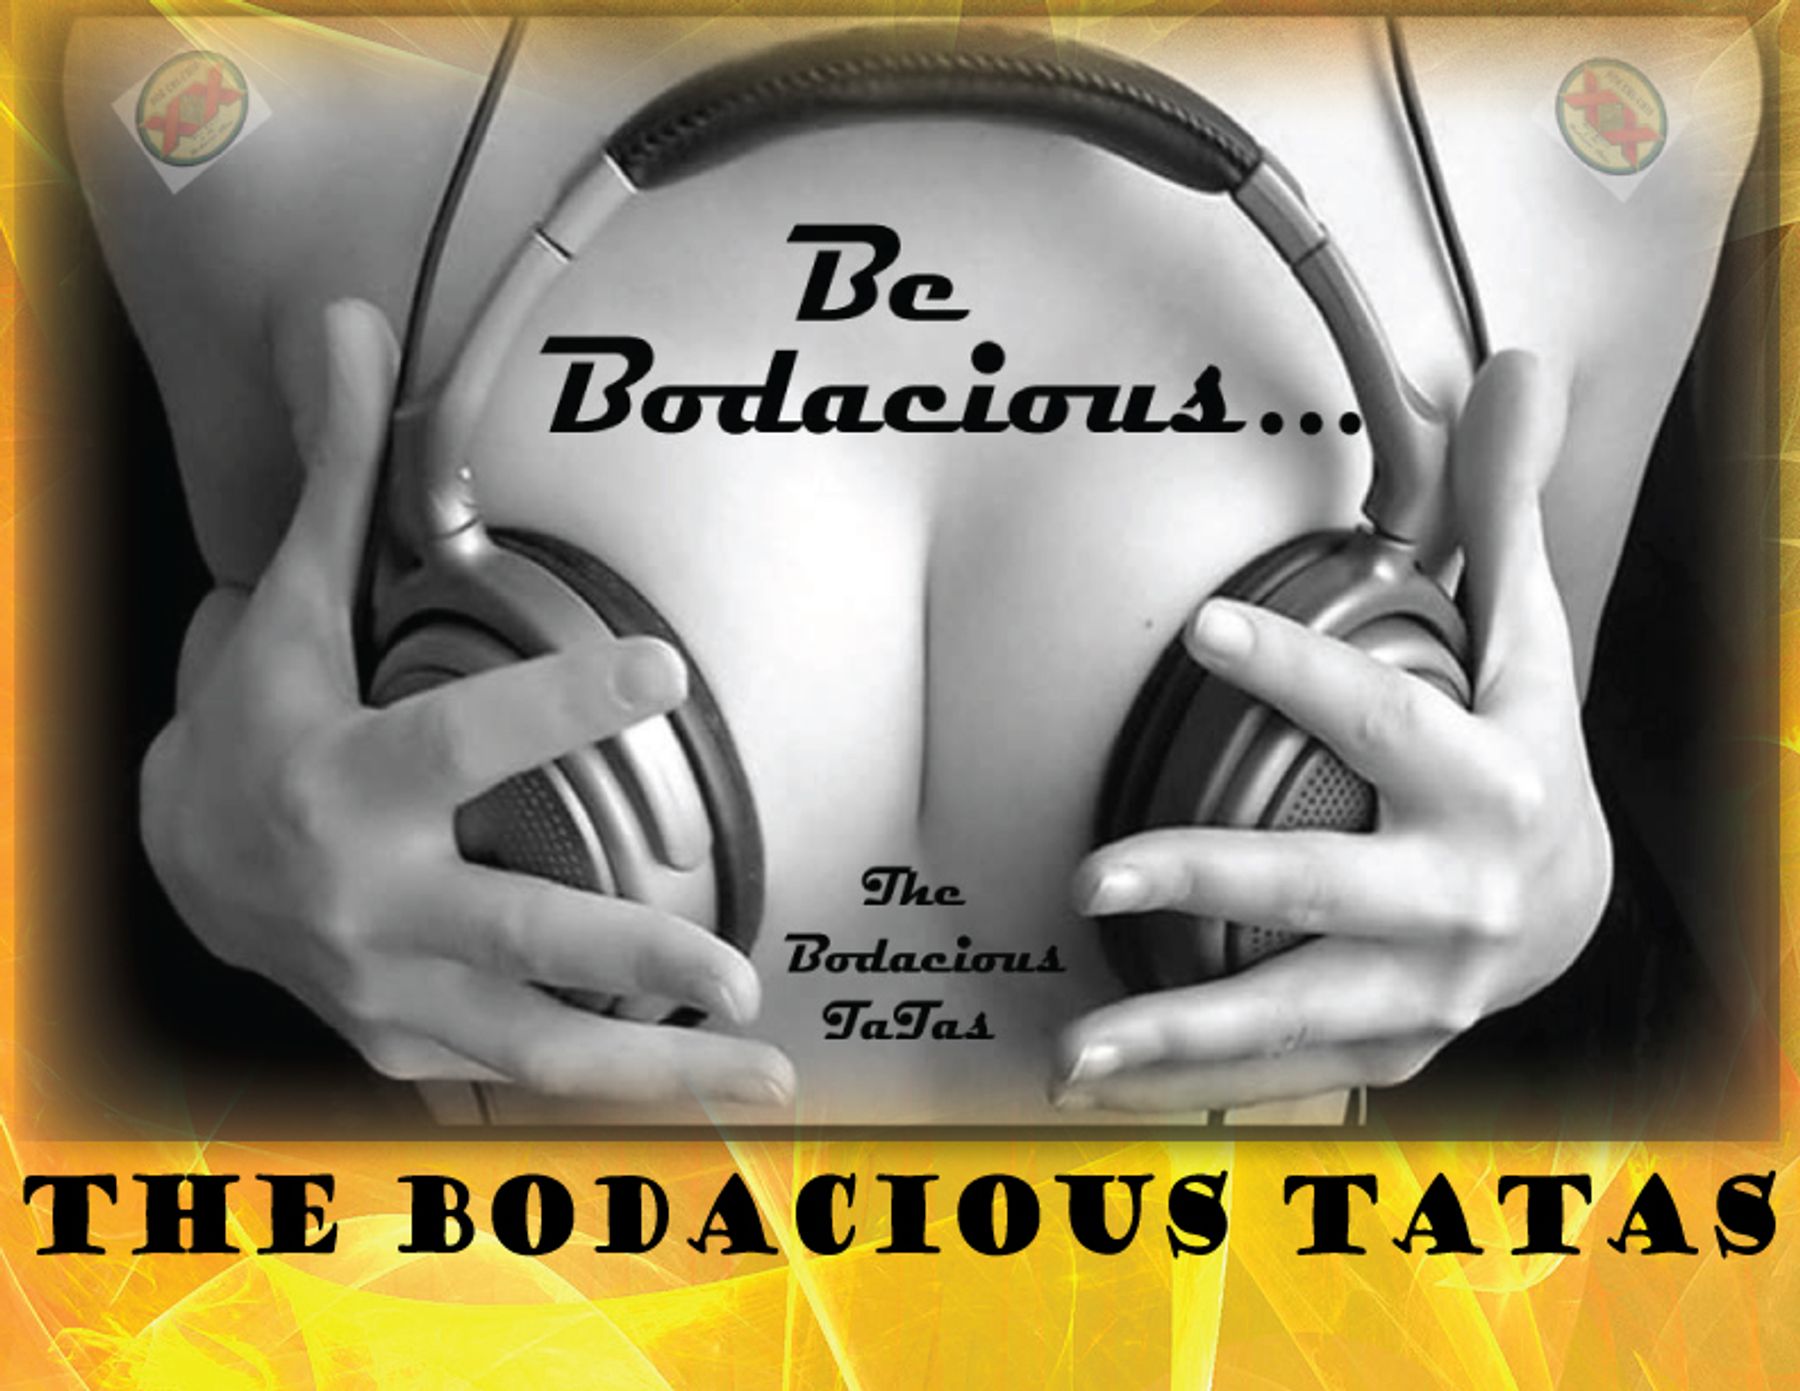 Bodacious tatas meaning